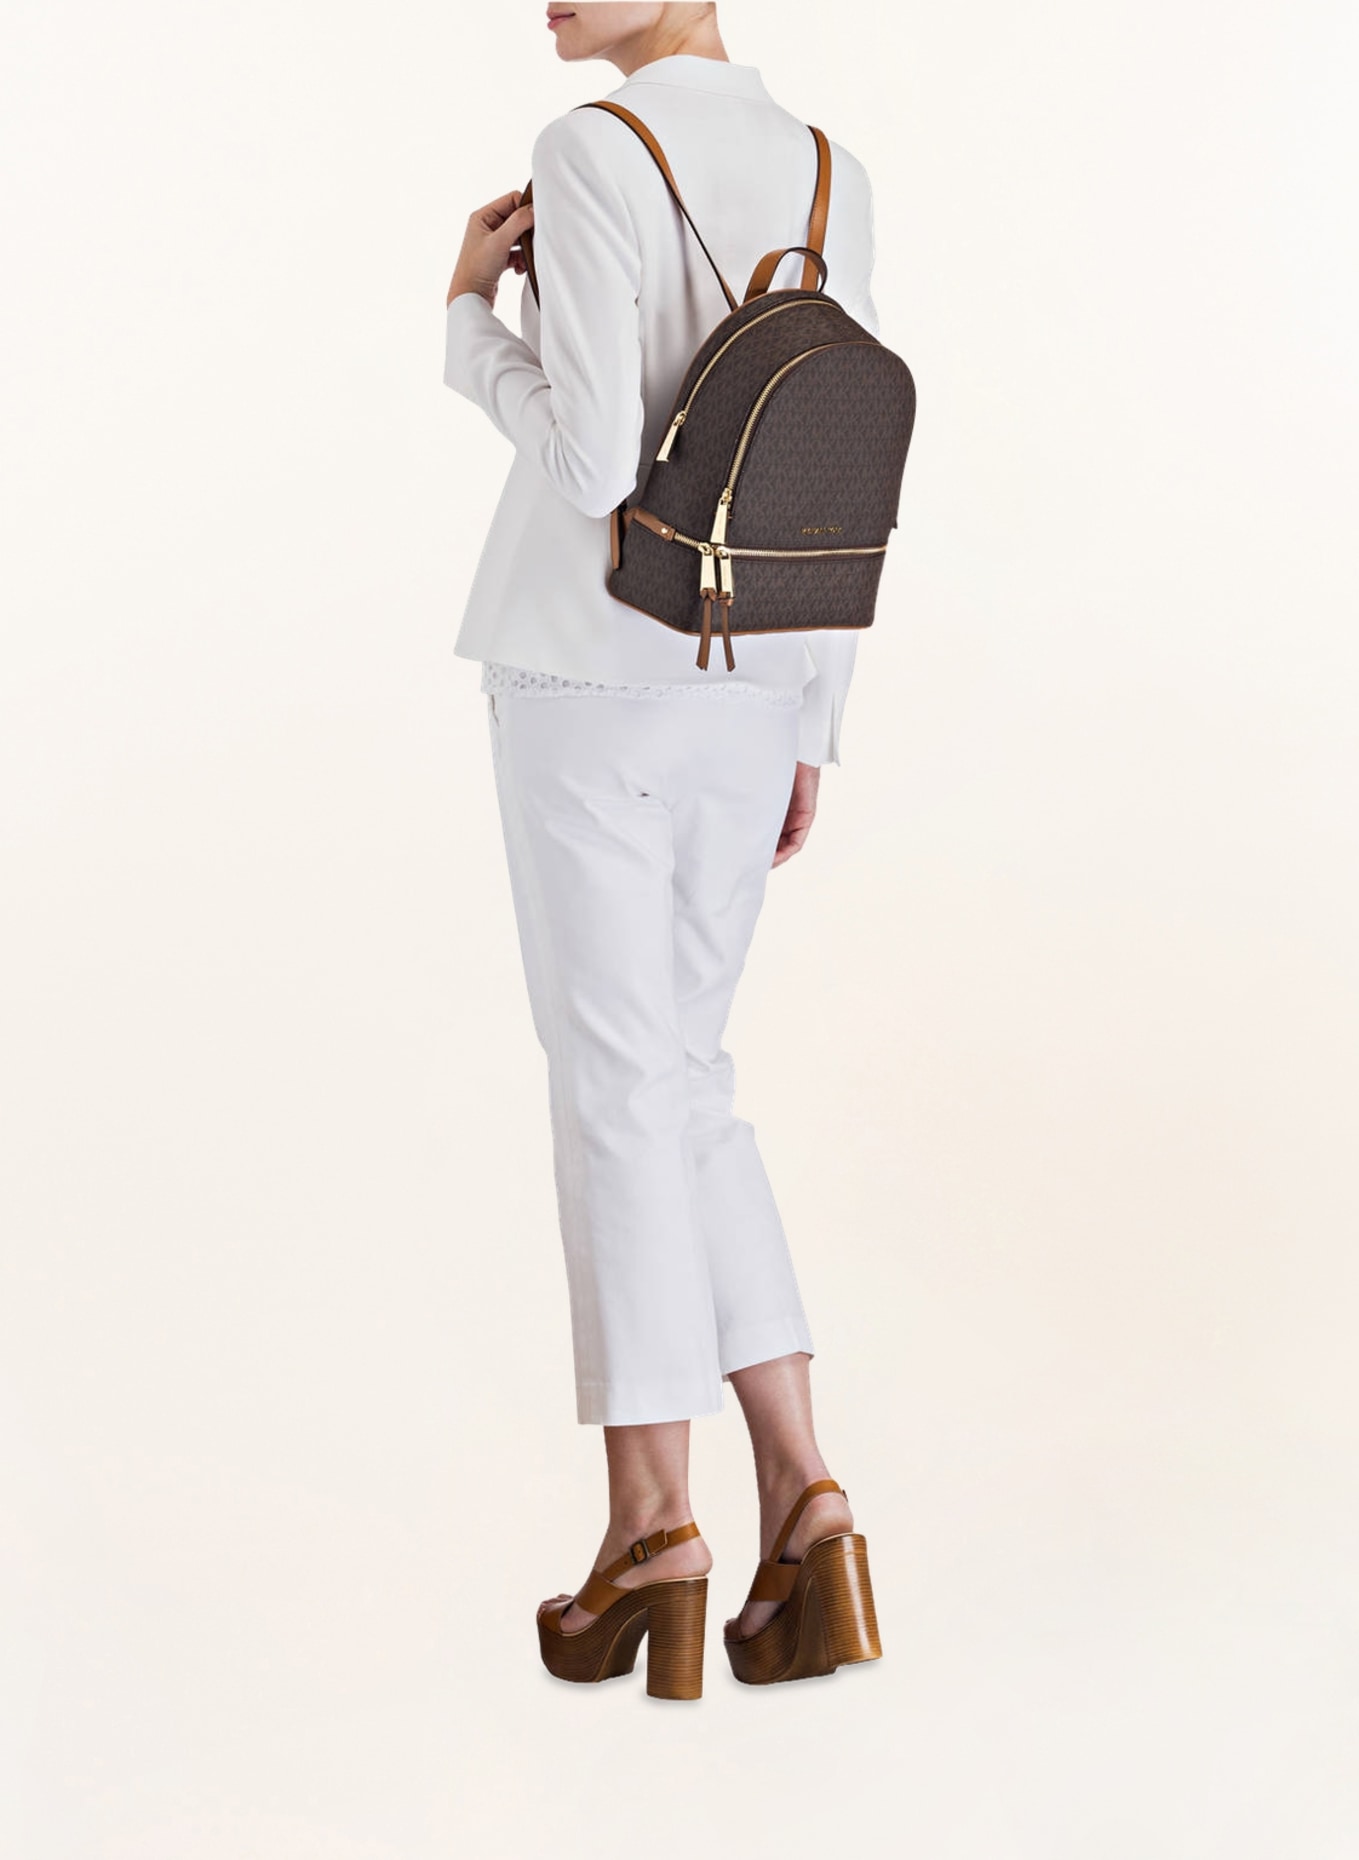 Michael+Kors+Women%27s+Backpack+Medium+-+Brown for sale online